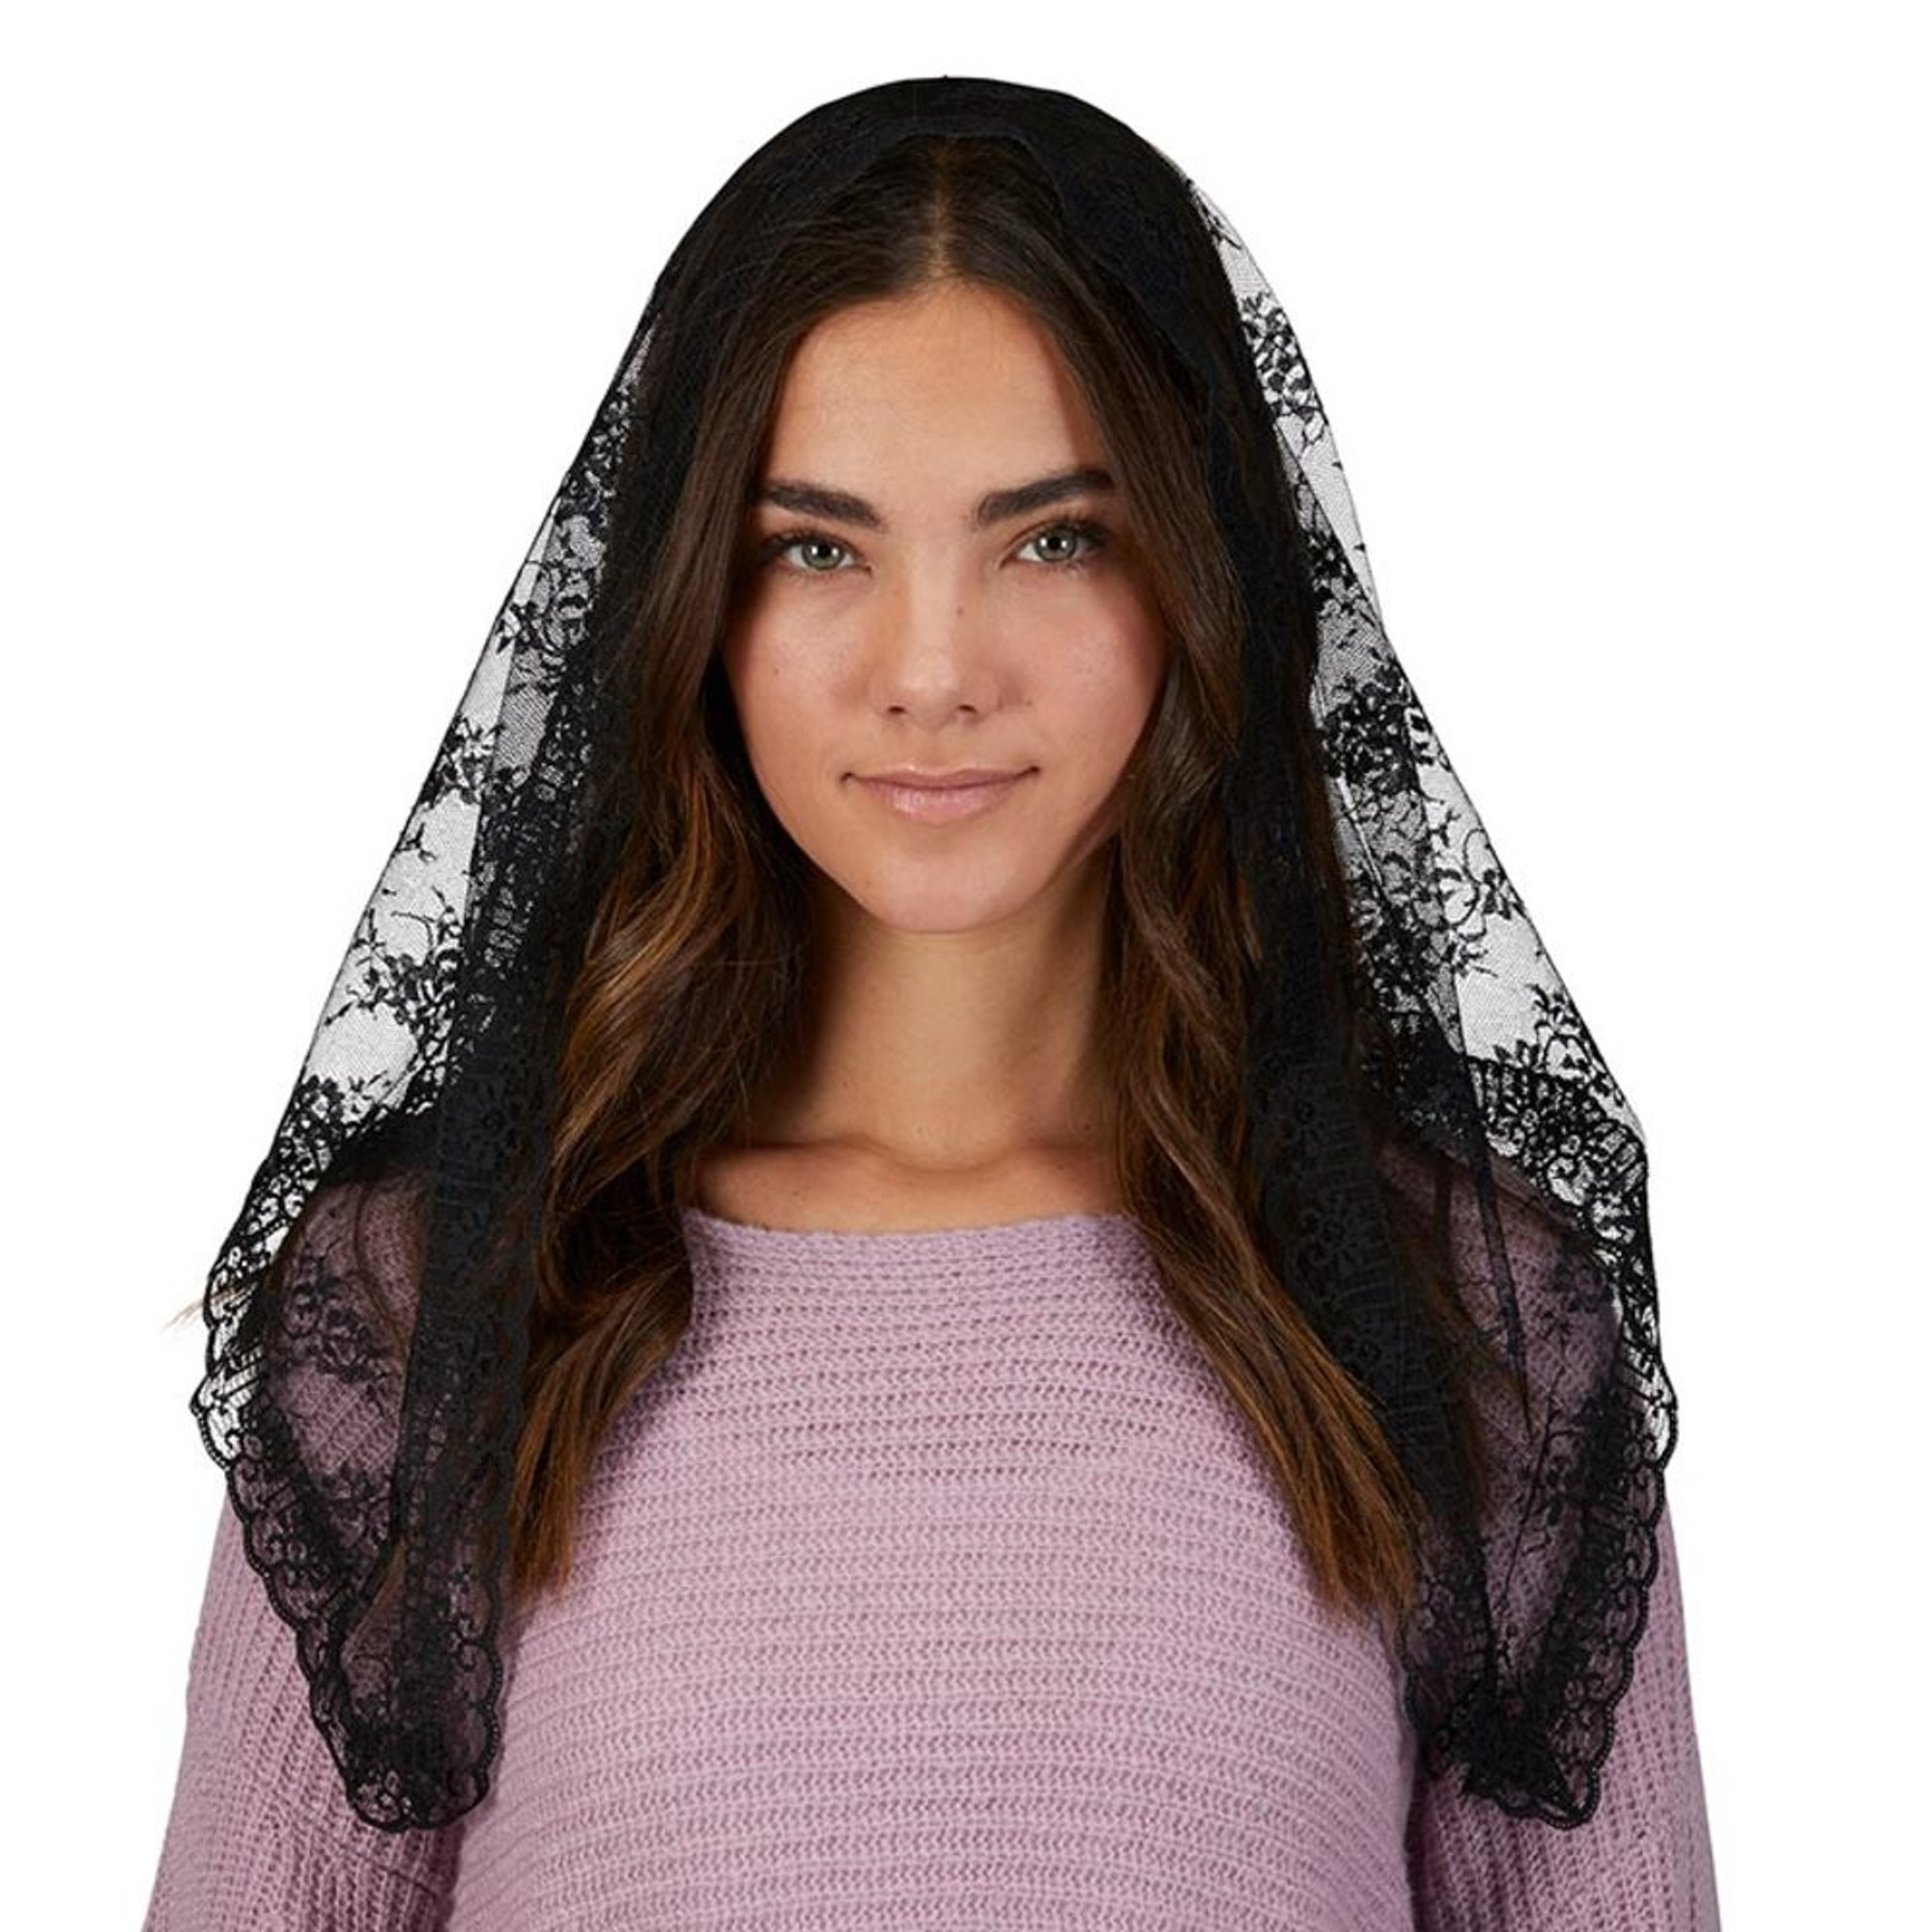 Traditional Black Lace Chapel Veil | The Catholic Company®